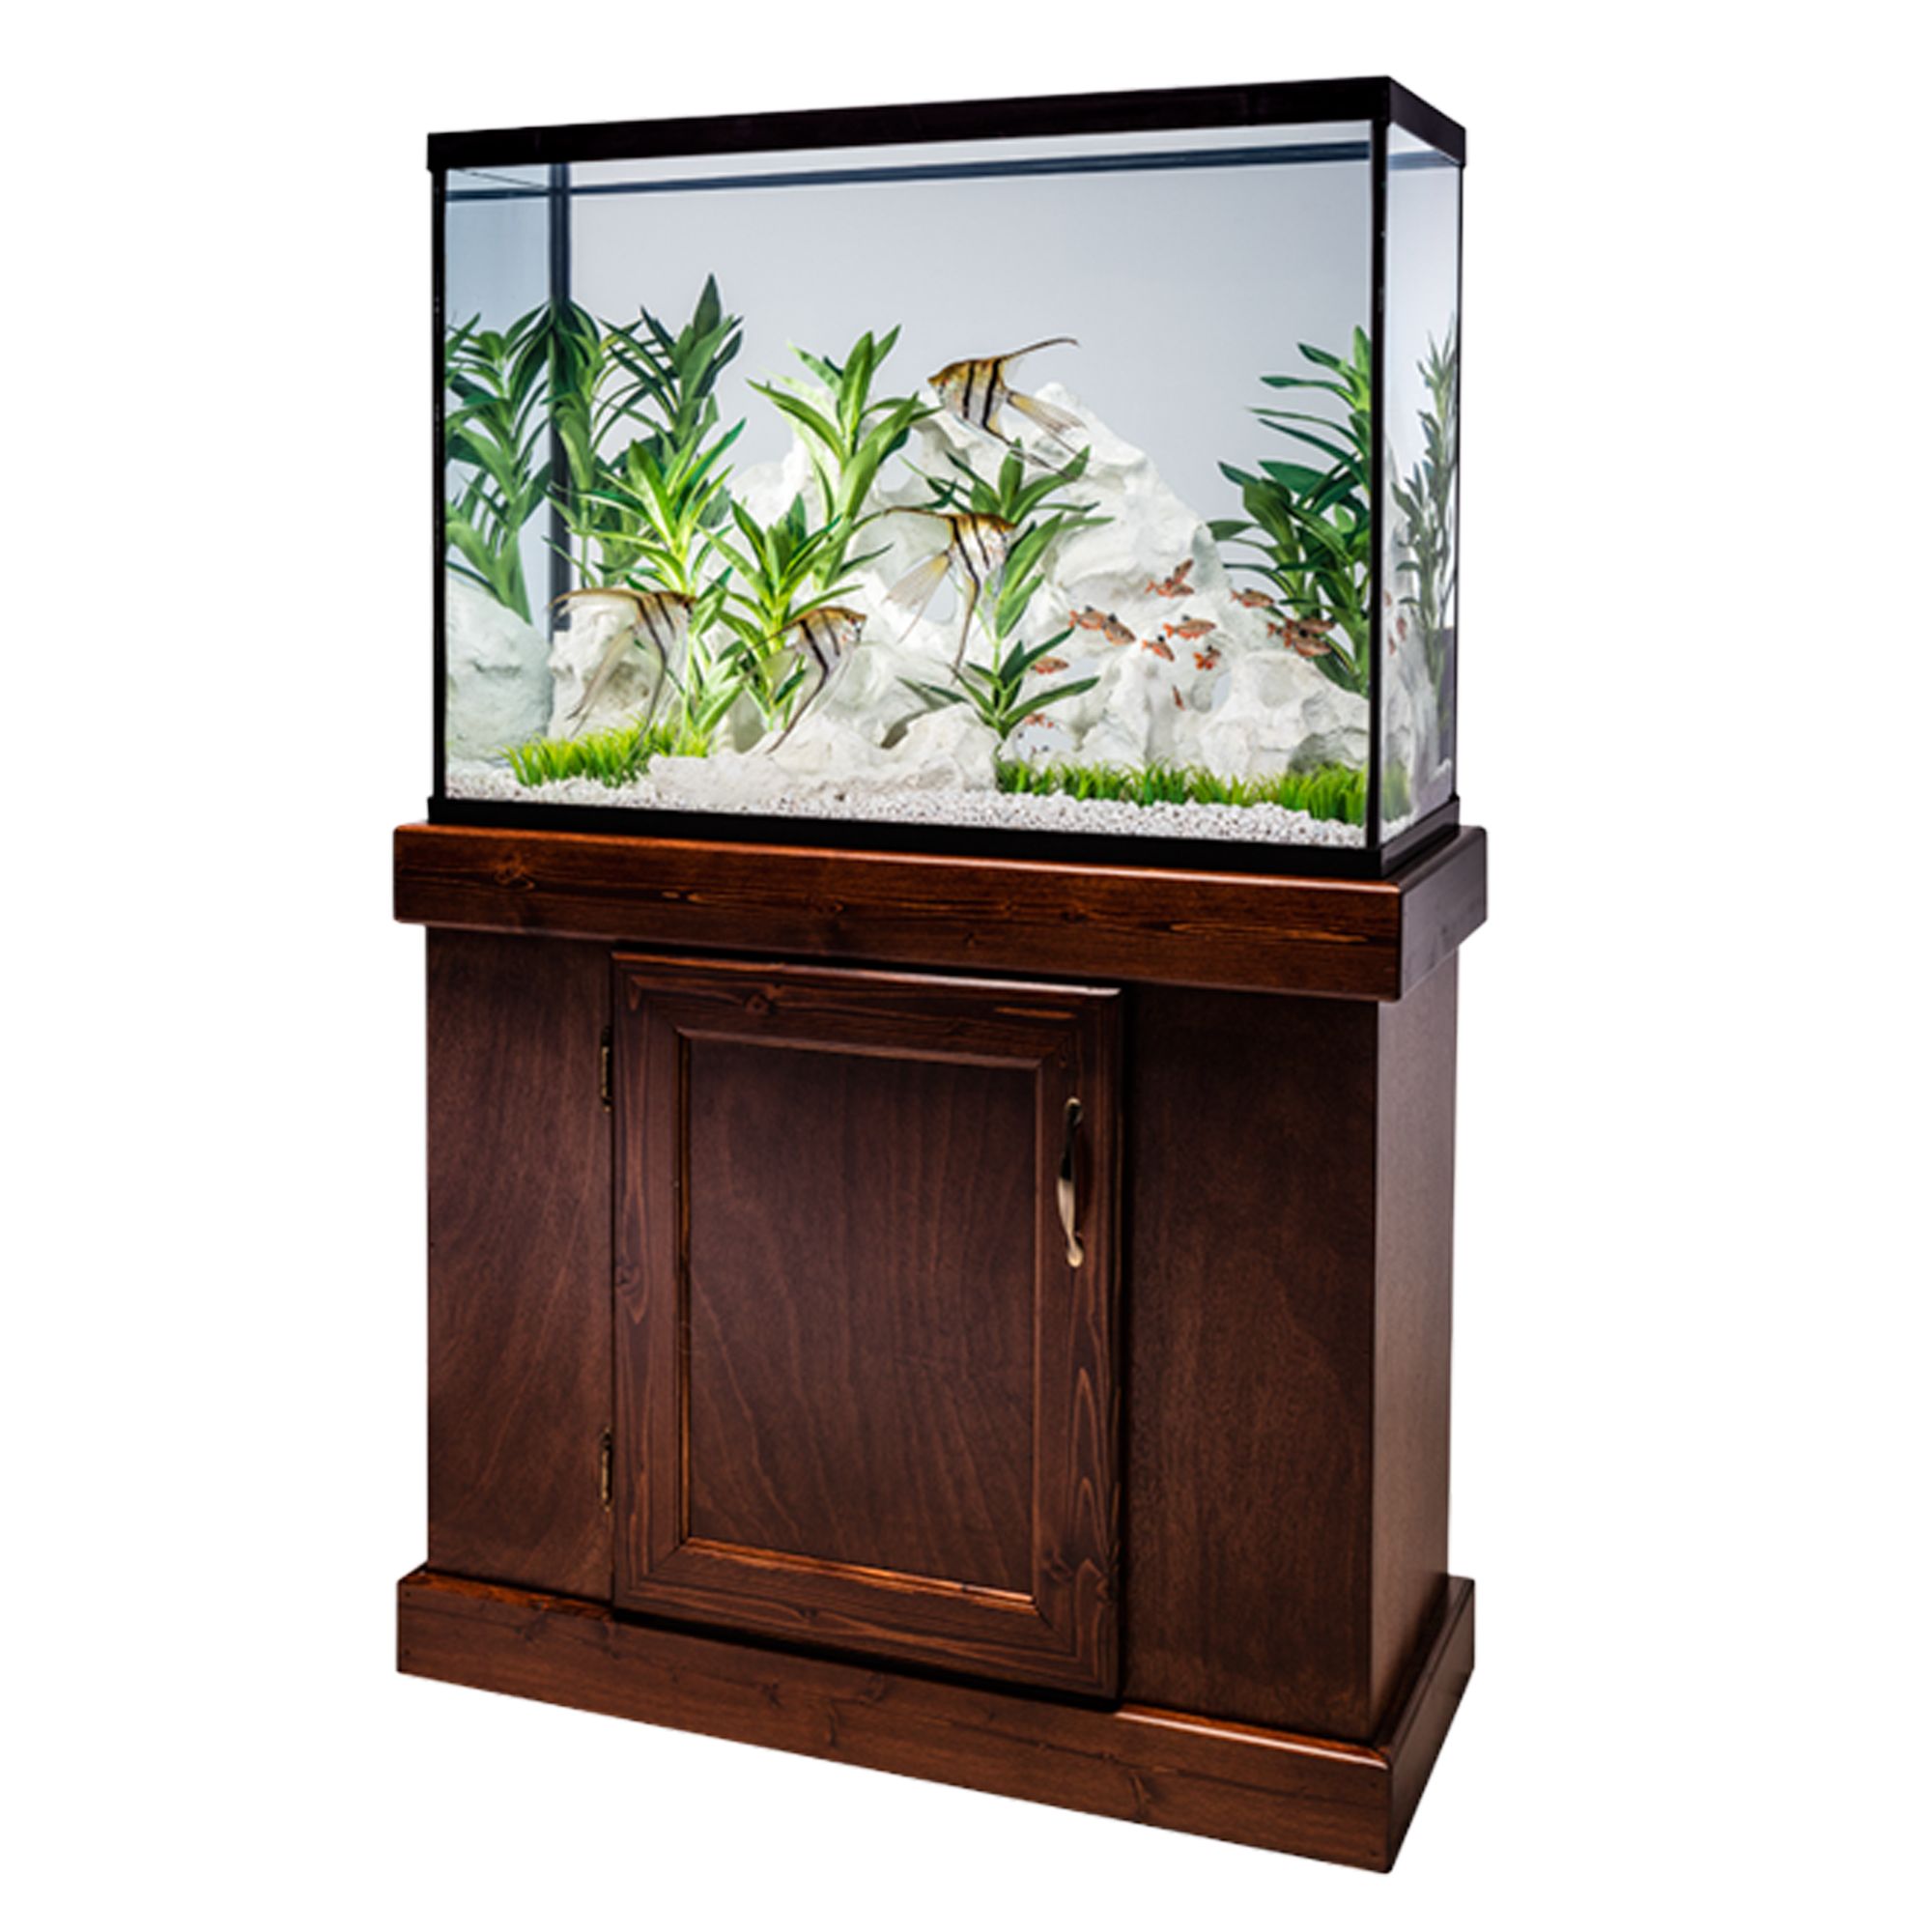 Marineland® 37 Gallon LED Aquarium Ensemble - 5257055?$pDp PlaceholDer Desktop$